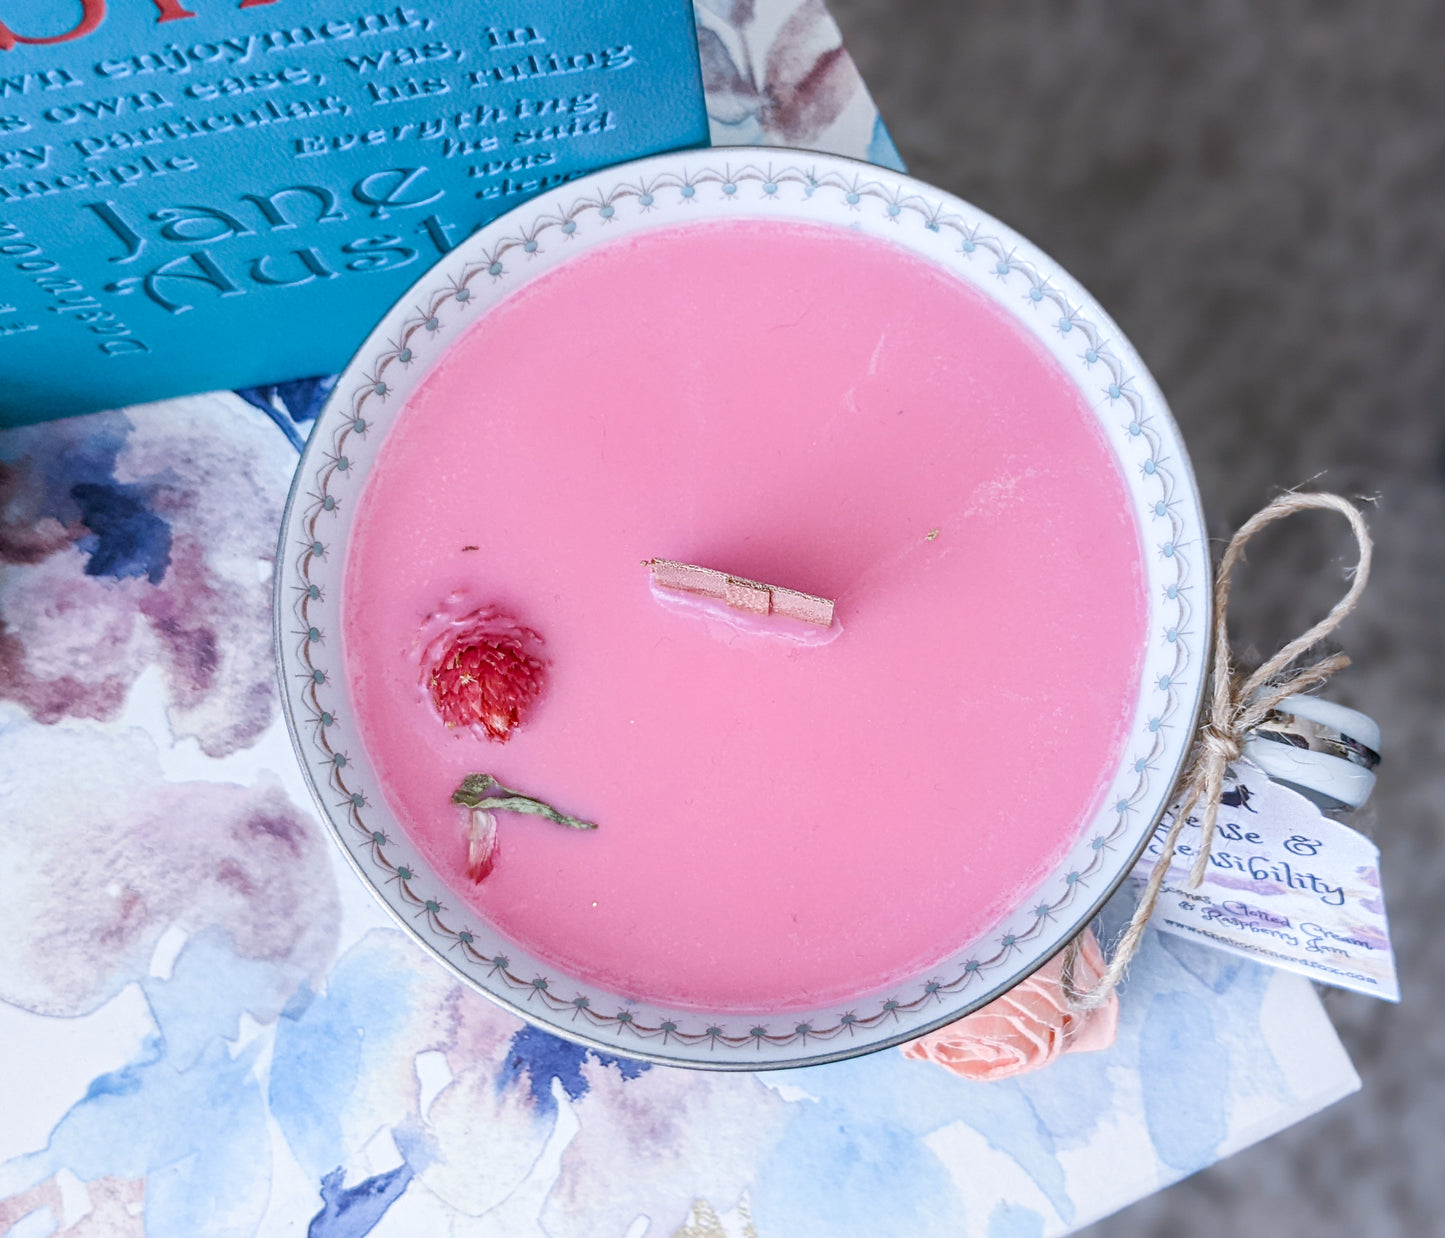 Sense & Sensibility Teacup - Scones, Clotted Cream & Raspberry Jam